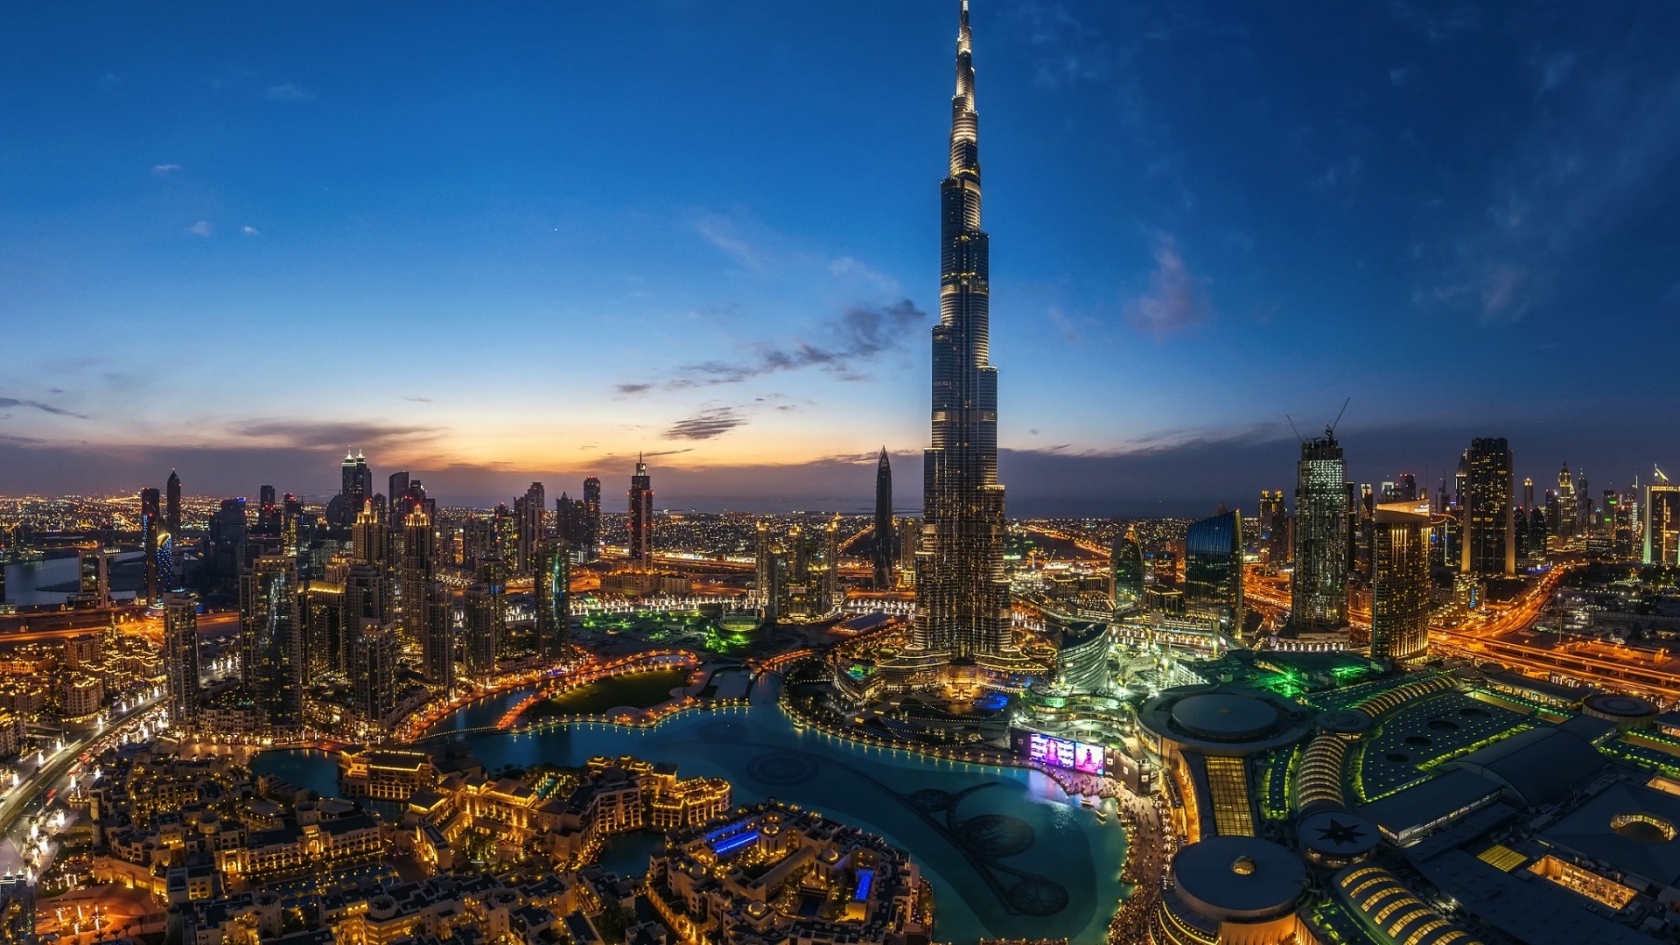 Night Lights in Dubai for 1680 x 945 HDTV resolution